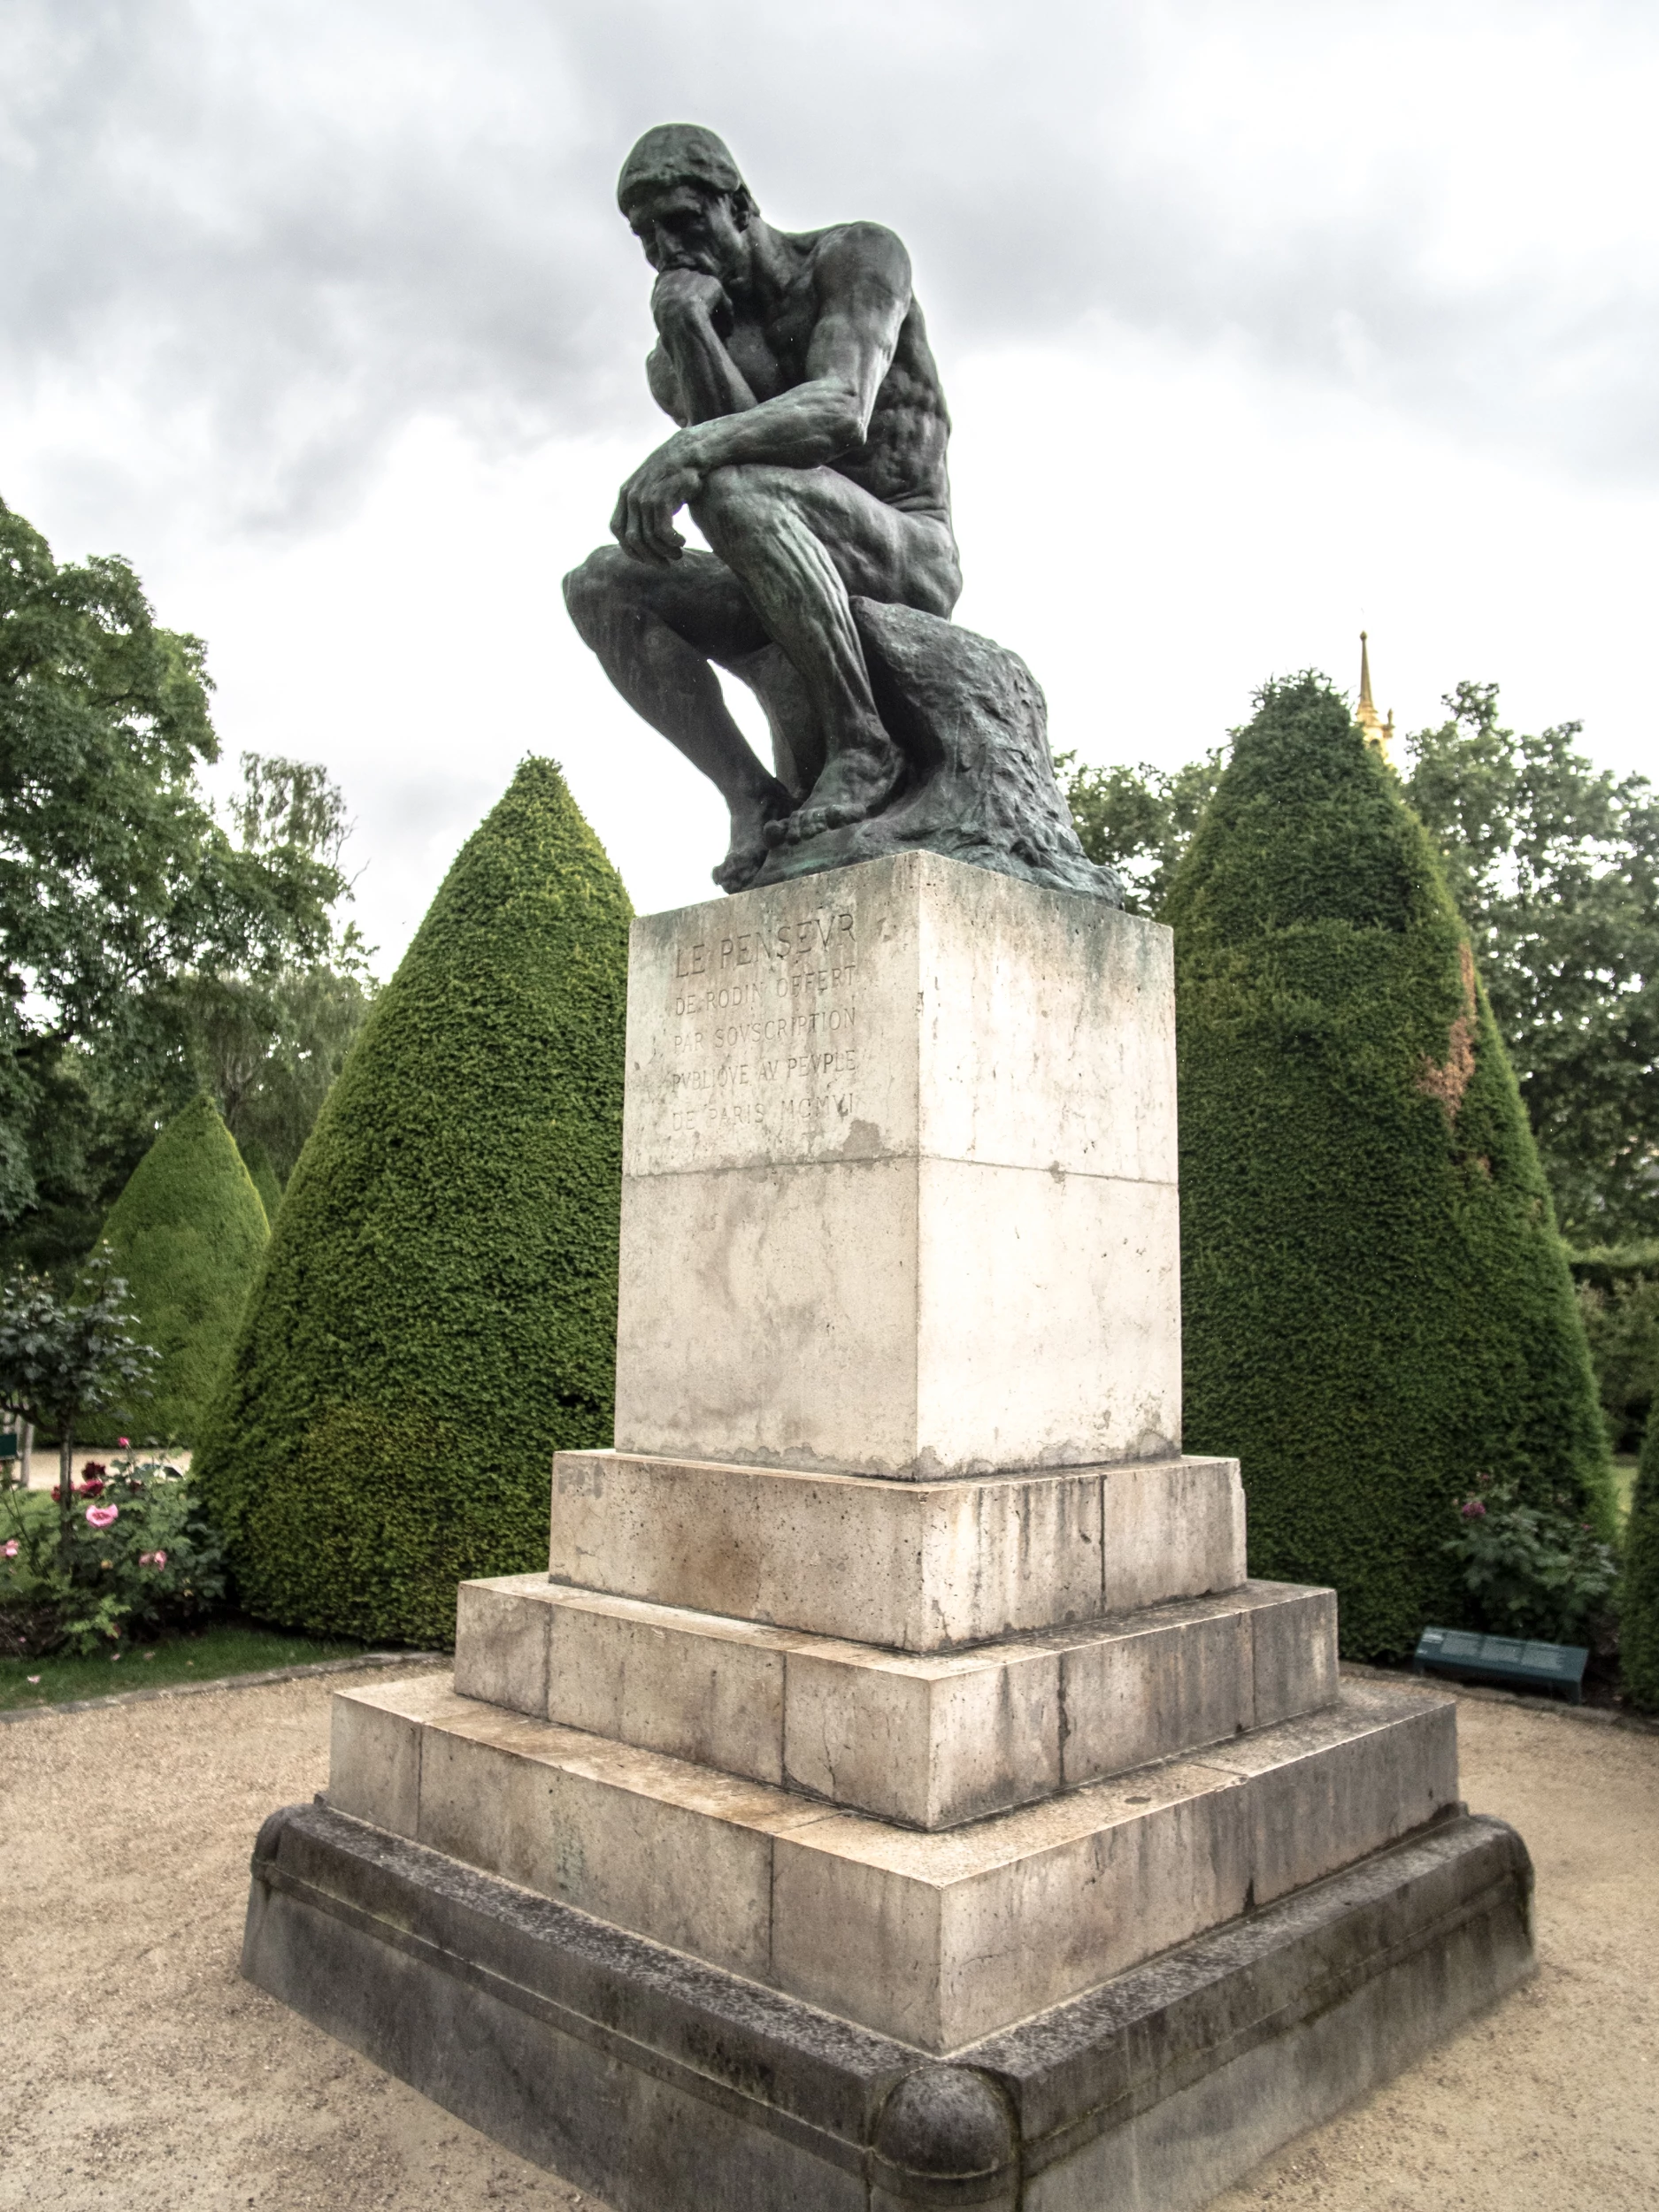 The Thinker, François Auguste René Rodin